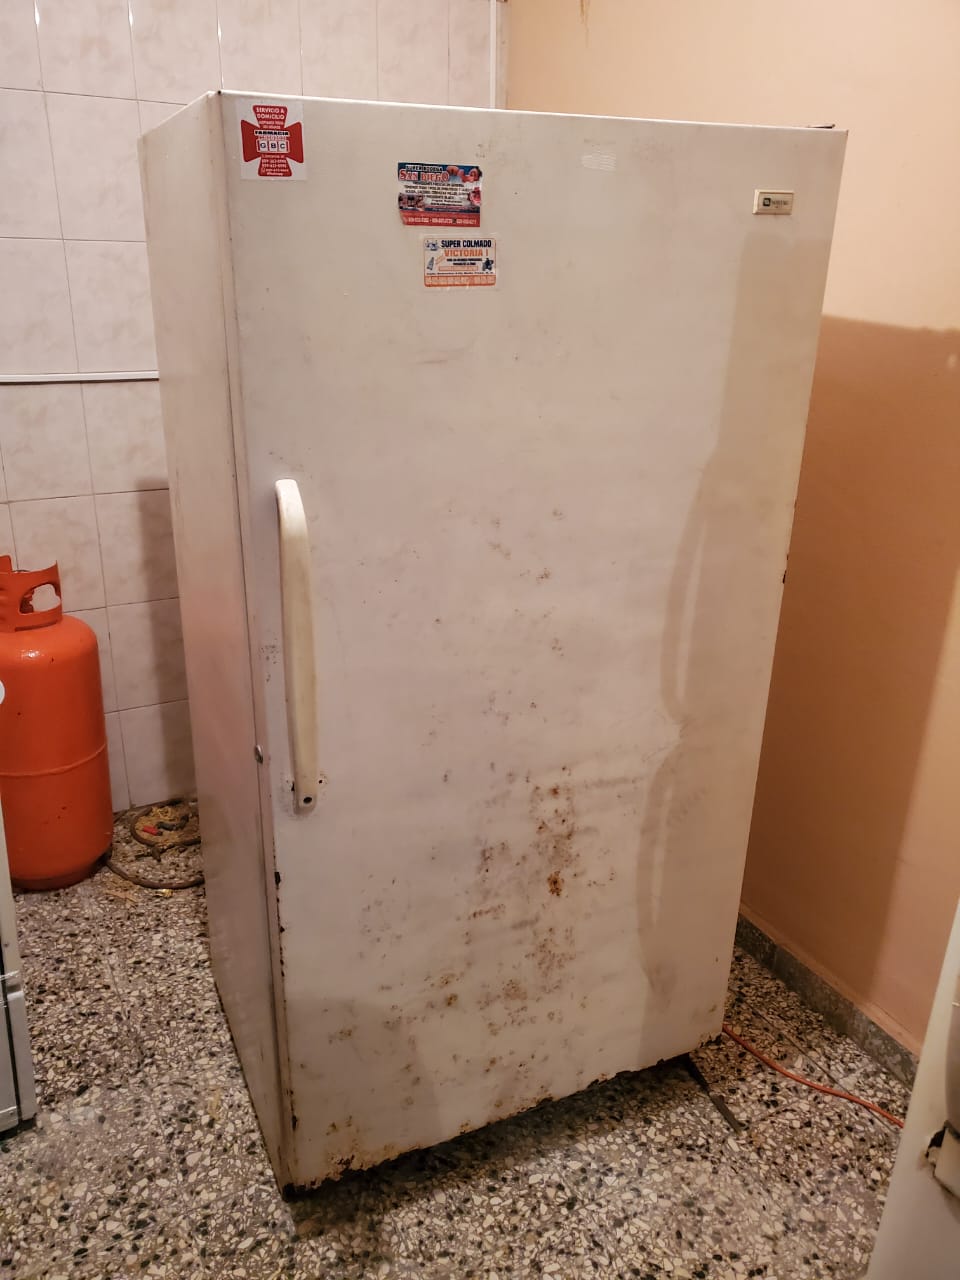 Freezer congelador nevera - romelia  en Santo Domingo DN Foto 7165943-2.jpg